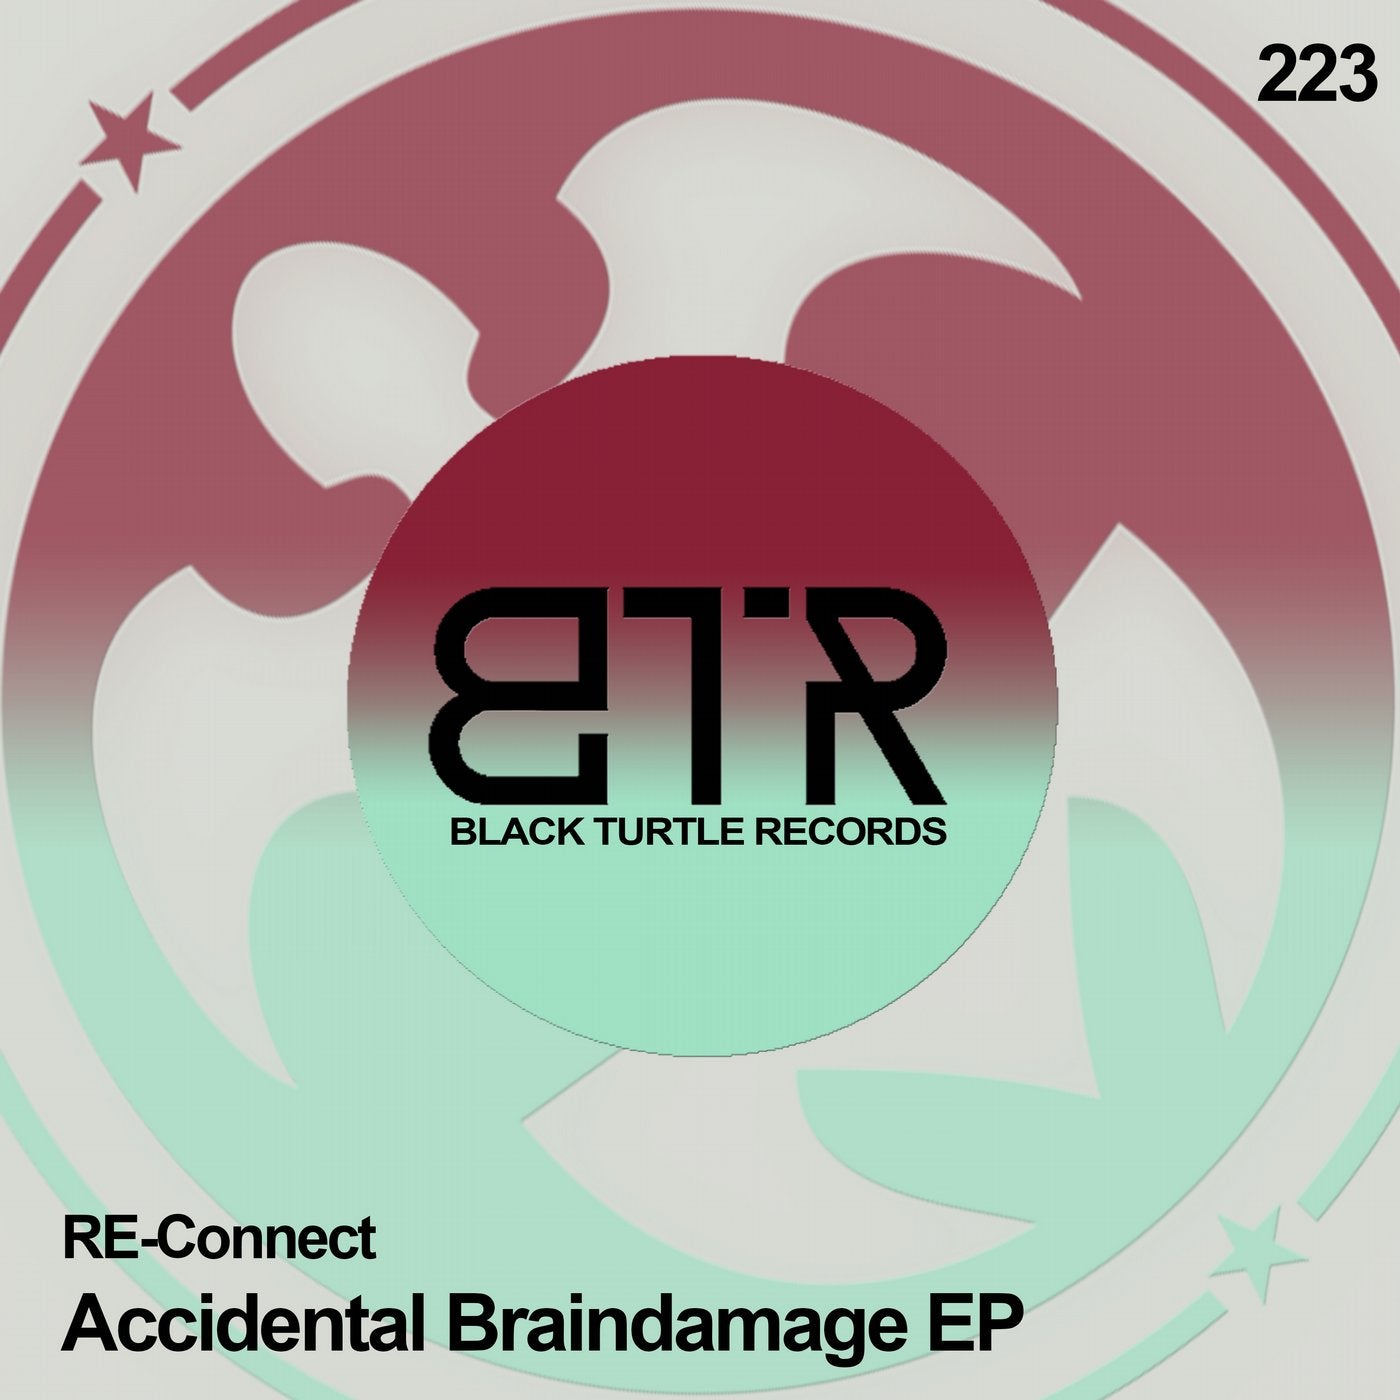 Accidental Braindamage EP